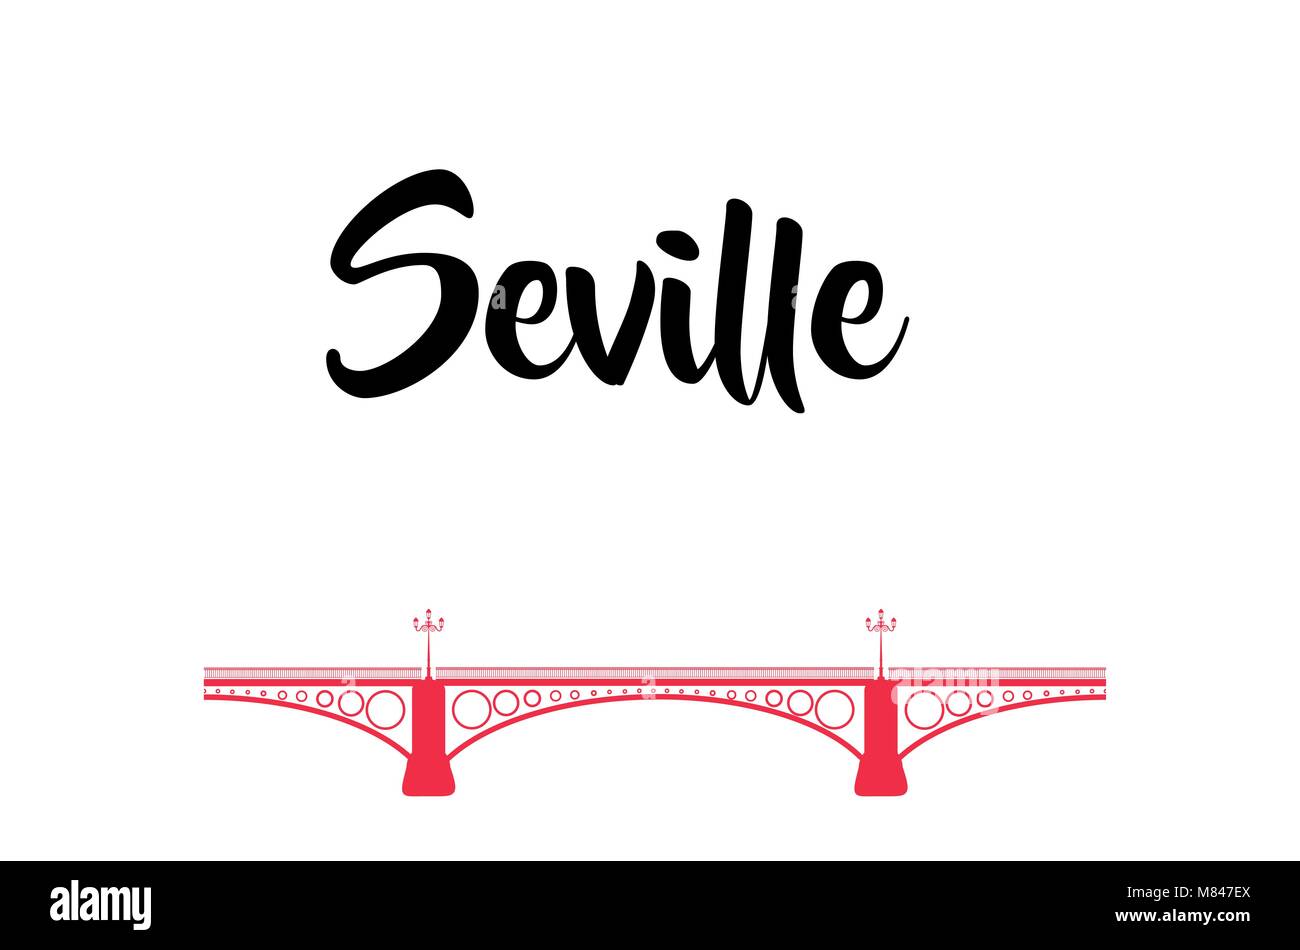 linear illustration of seville, triana bridge with the word seville written linear illustration of seville, triana bridge with the word seville writte Stock Vector